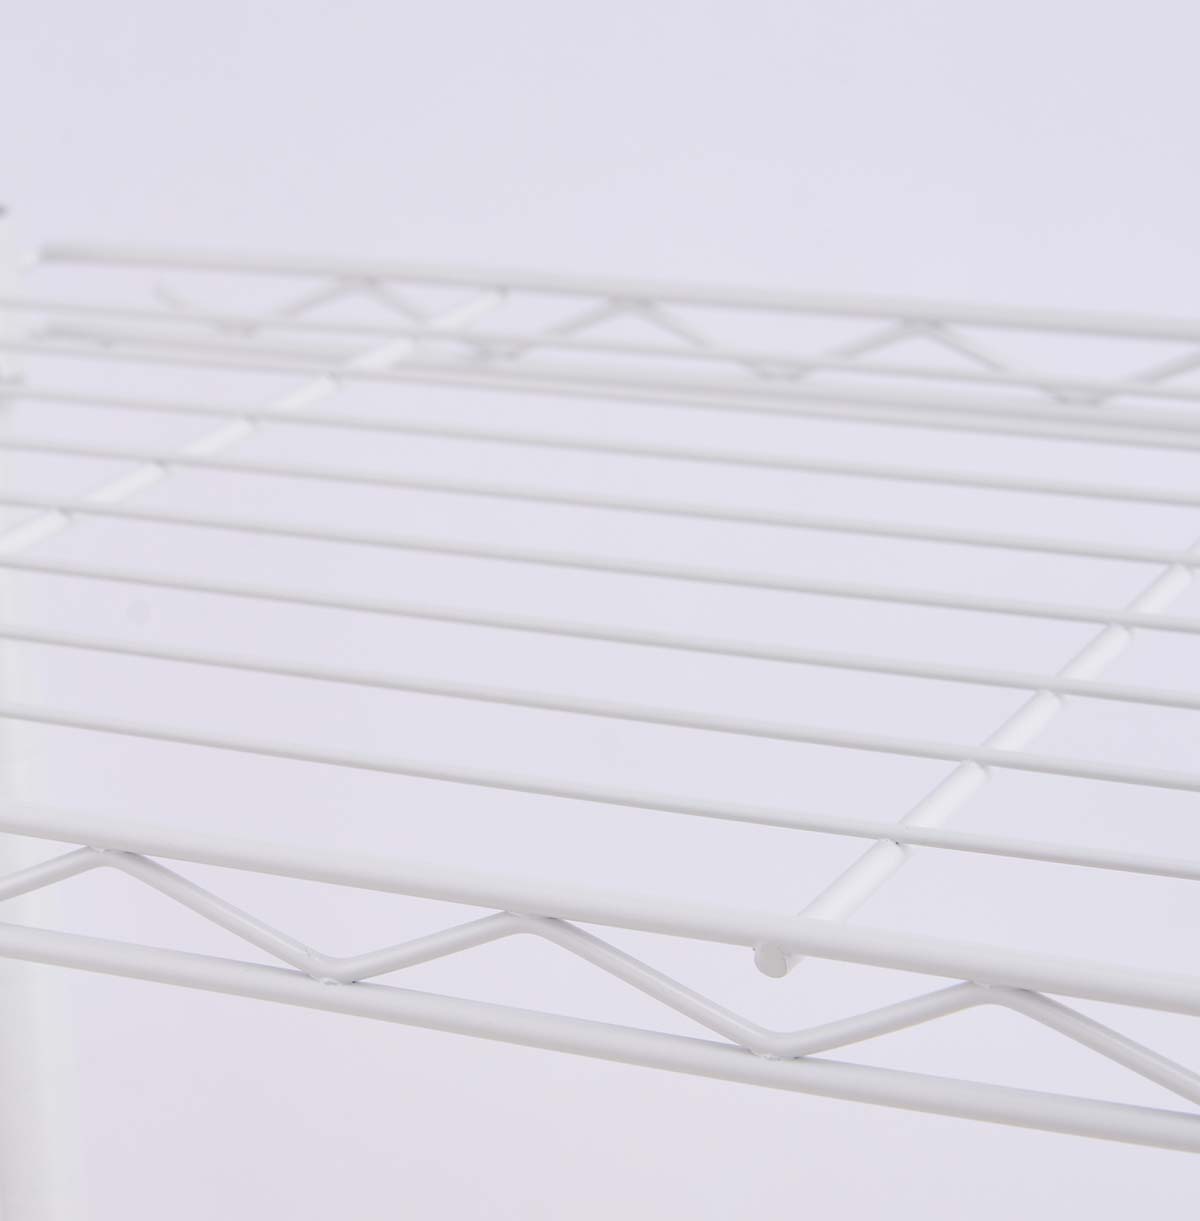 stainless steel wire shelf rack price